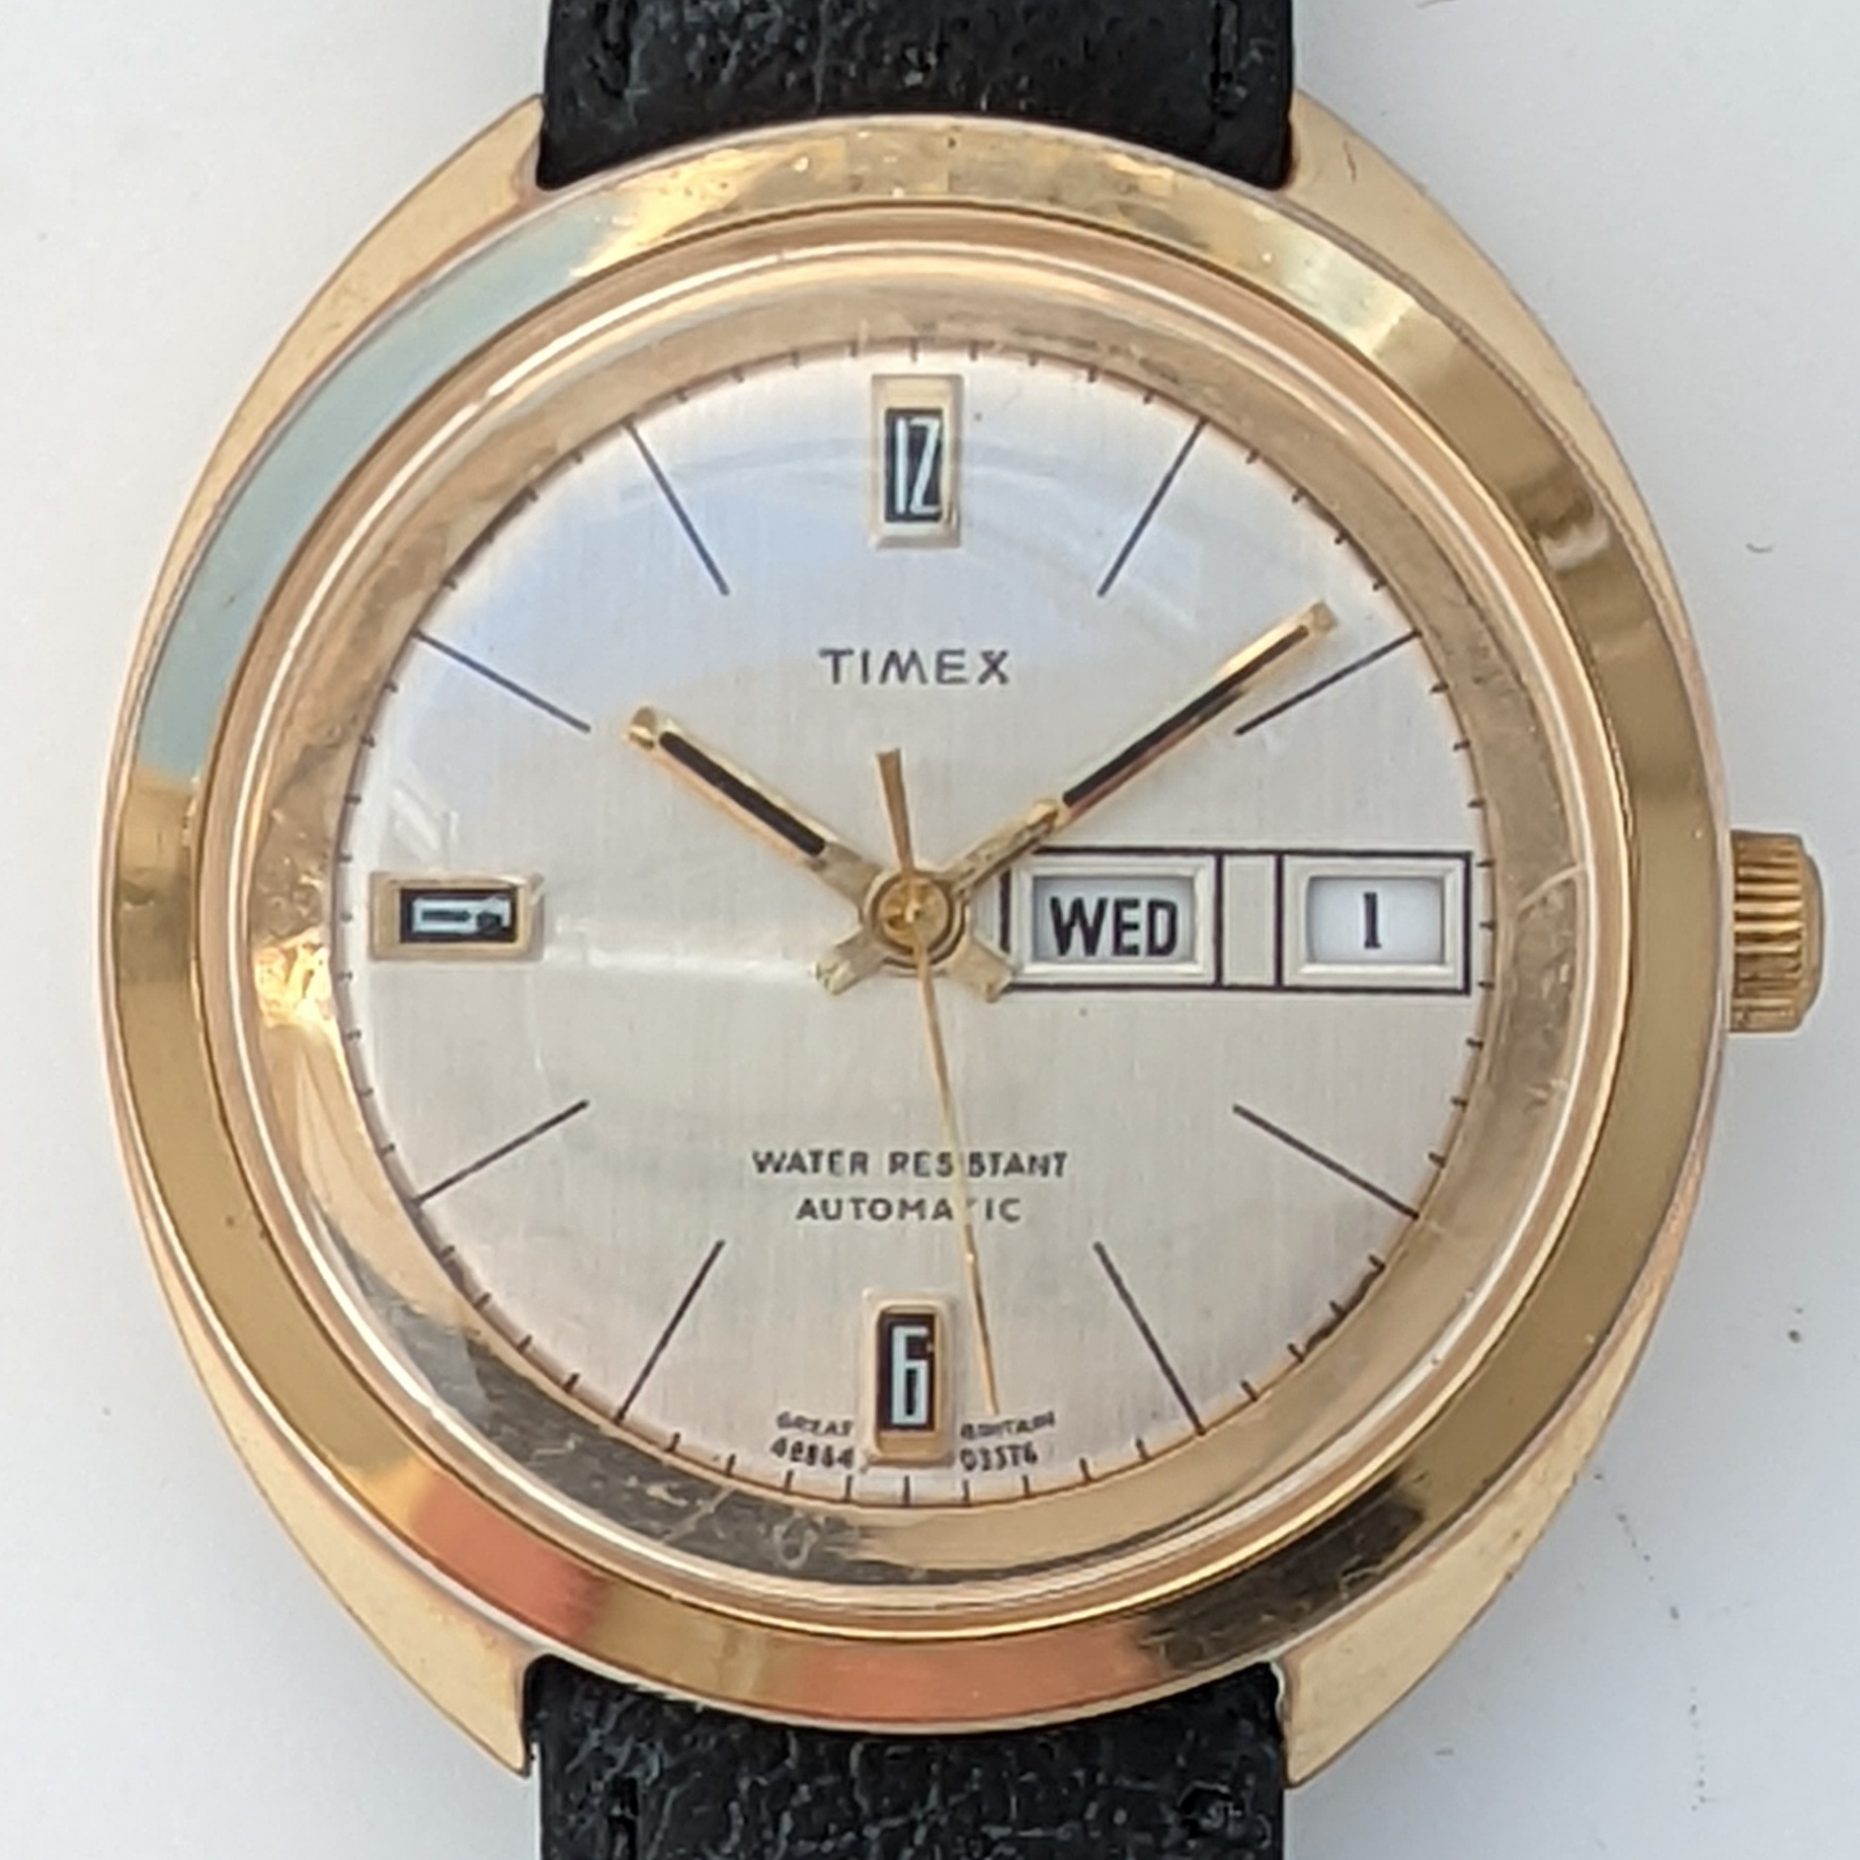 Timex Viscount 48864 03376 [1976]